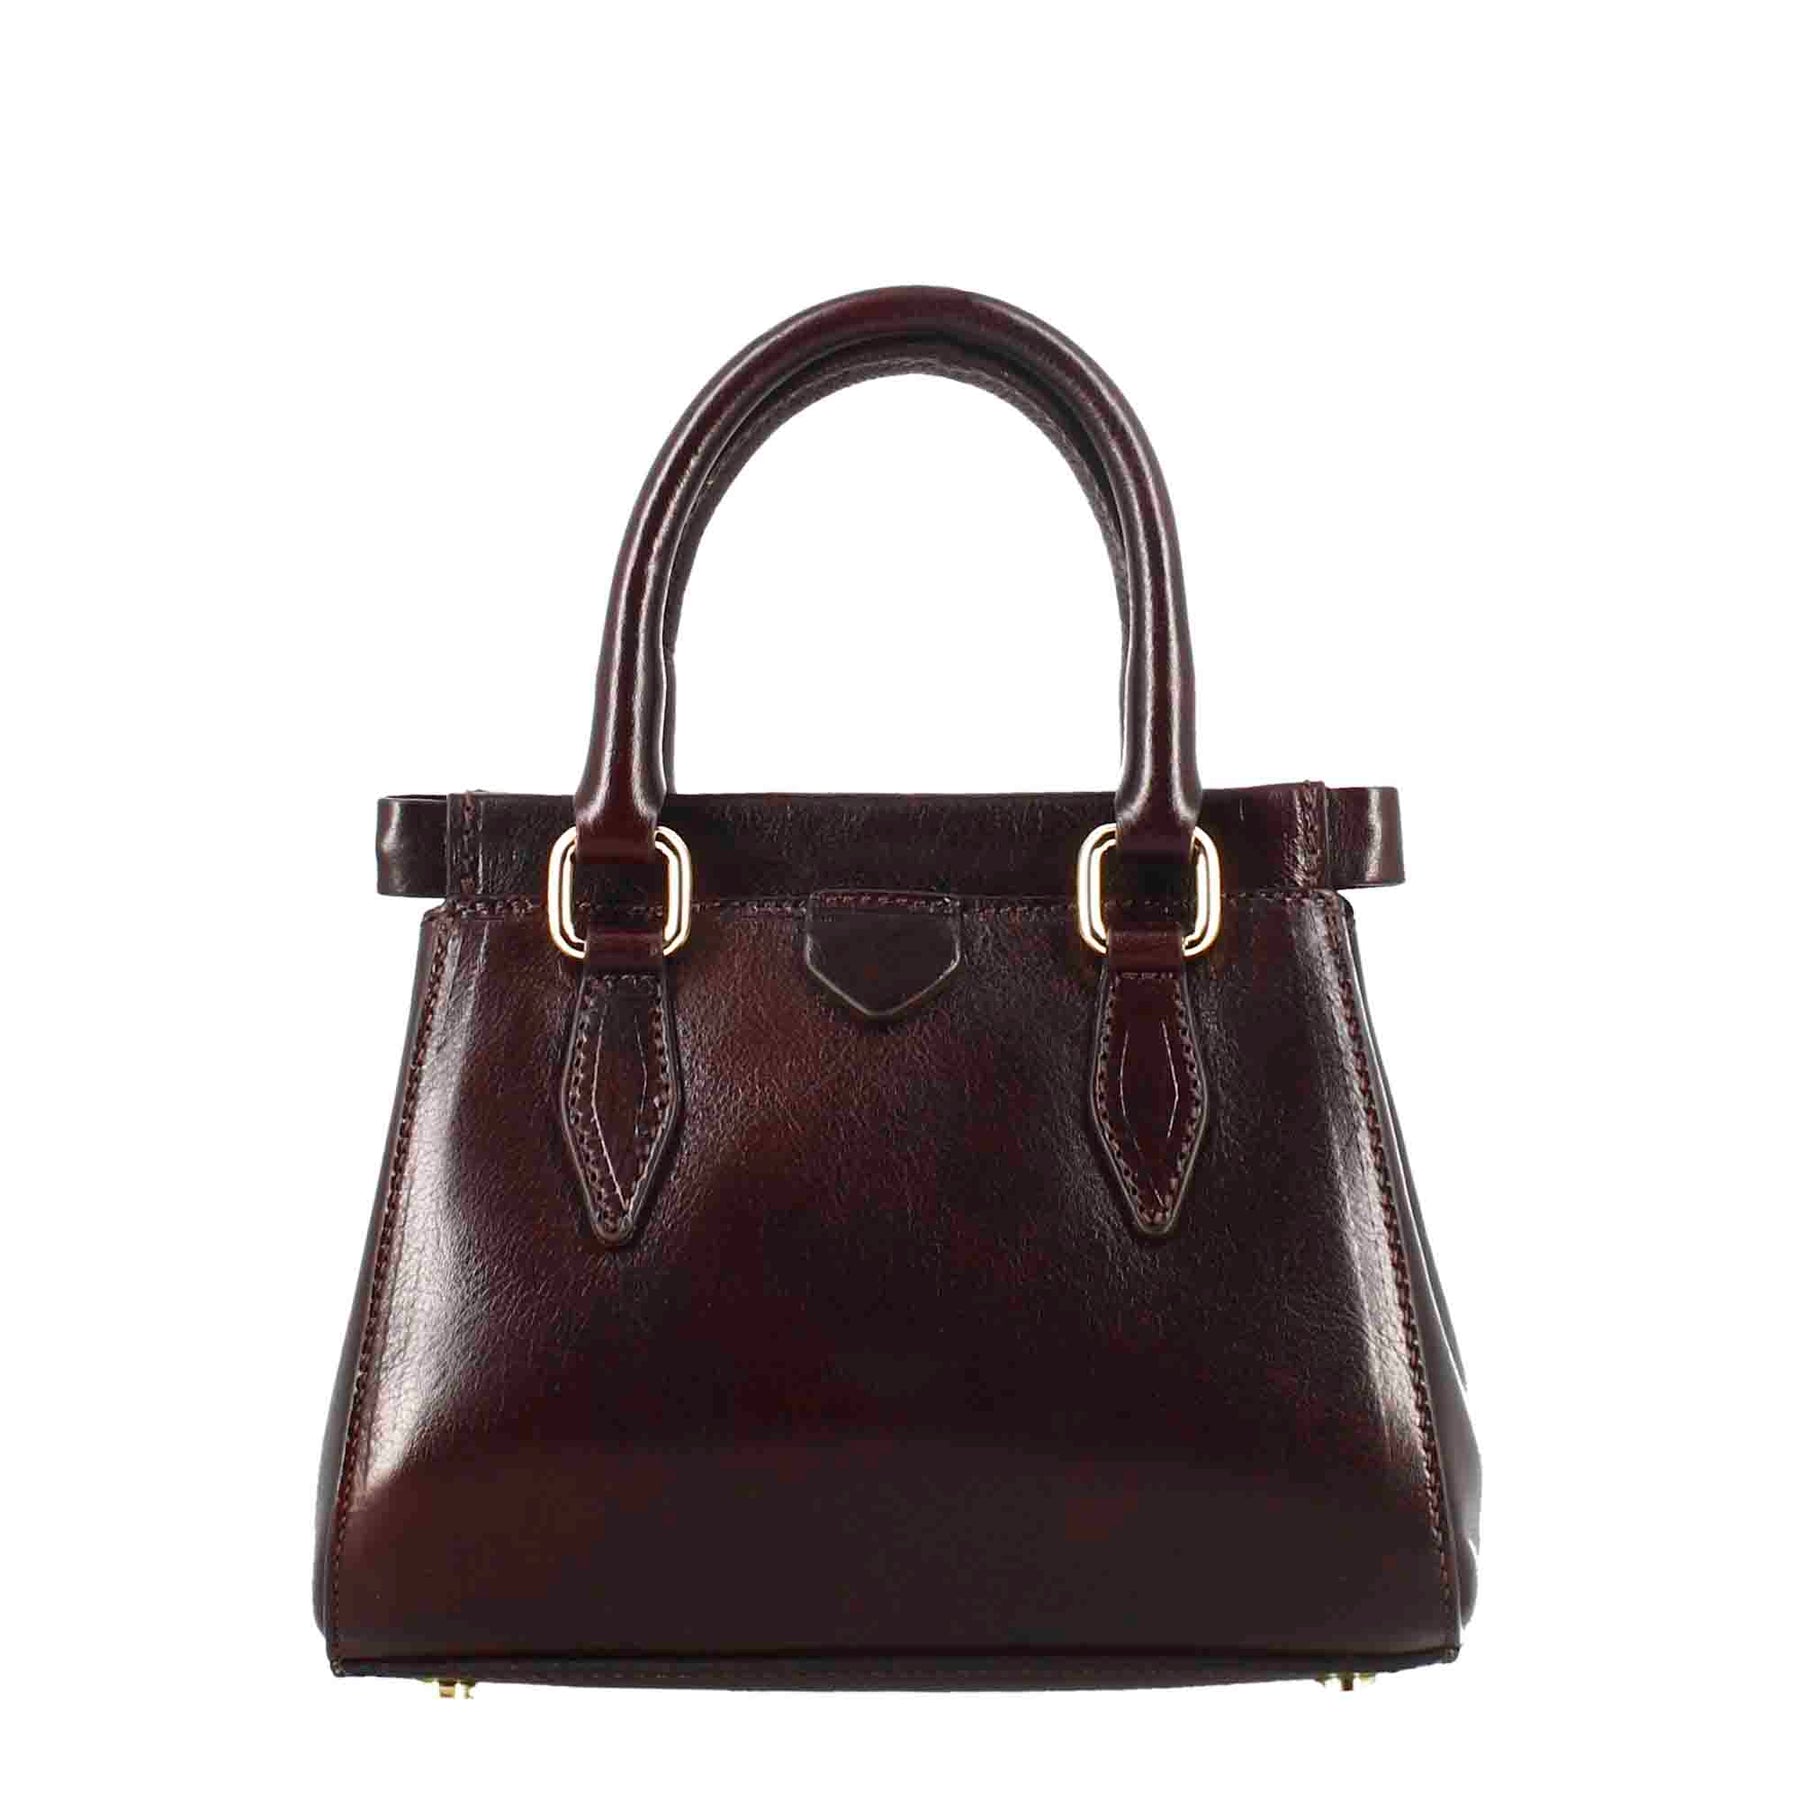 Fiorenza leather handbag with removable dark brown shoulder strap